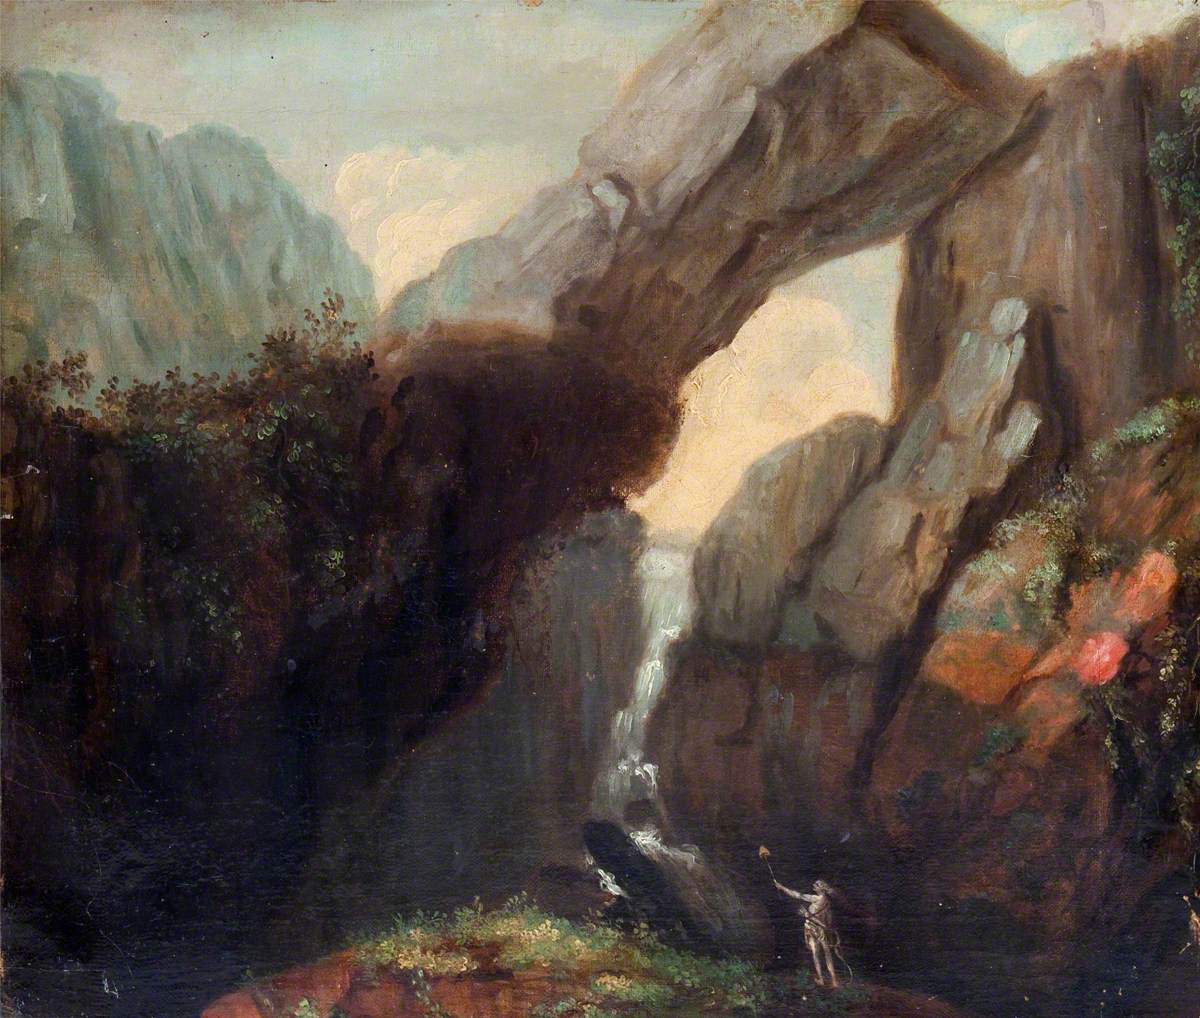 Falls of Terni (Rock of Ages)